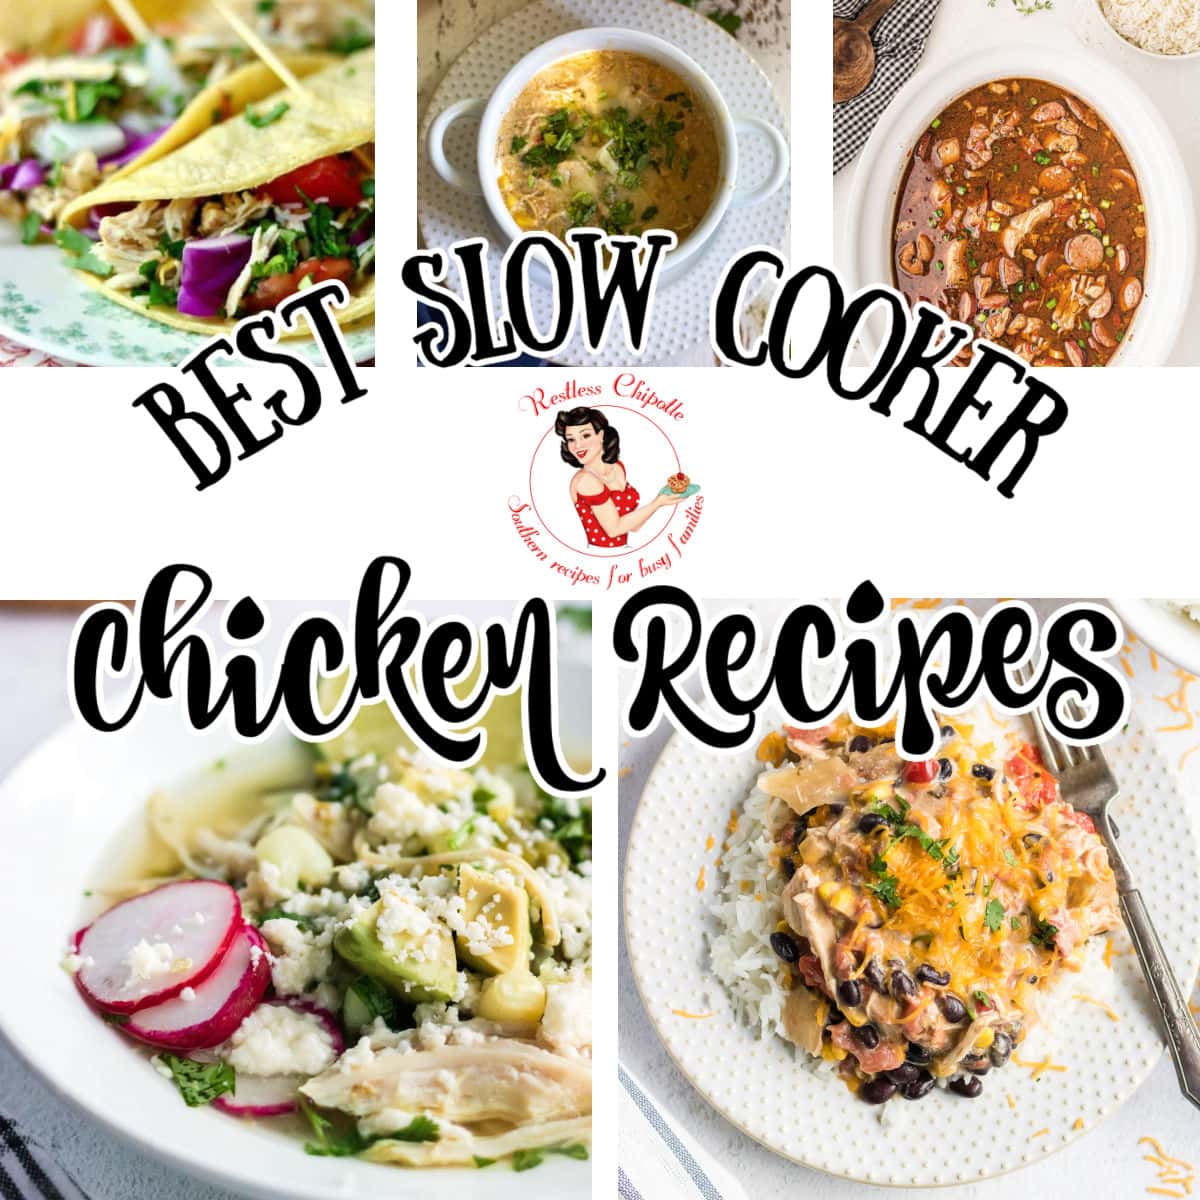 Best Crockpot Chicken Recipes